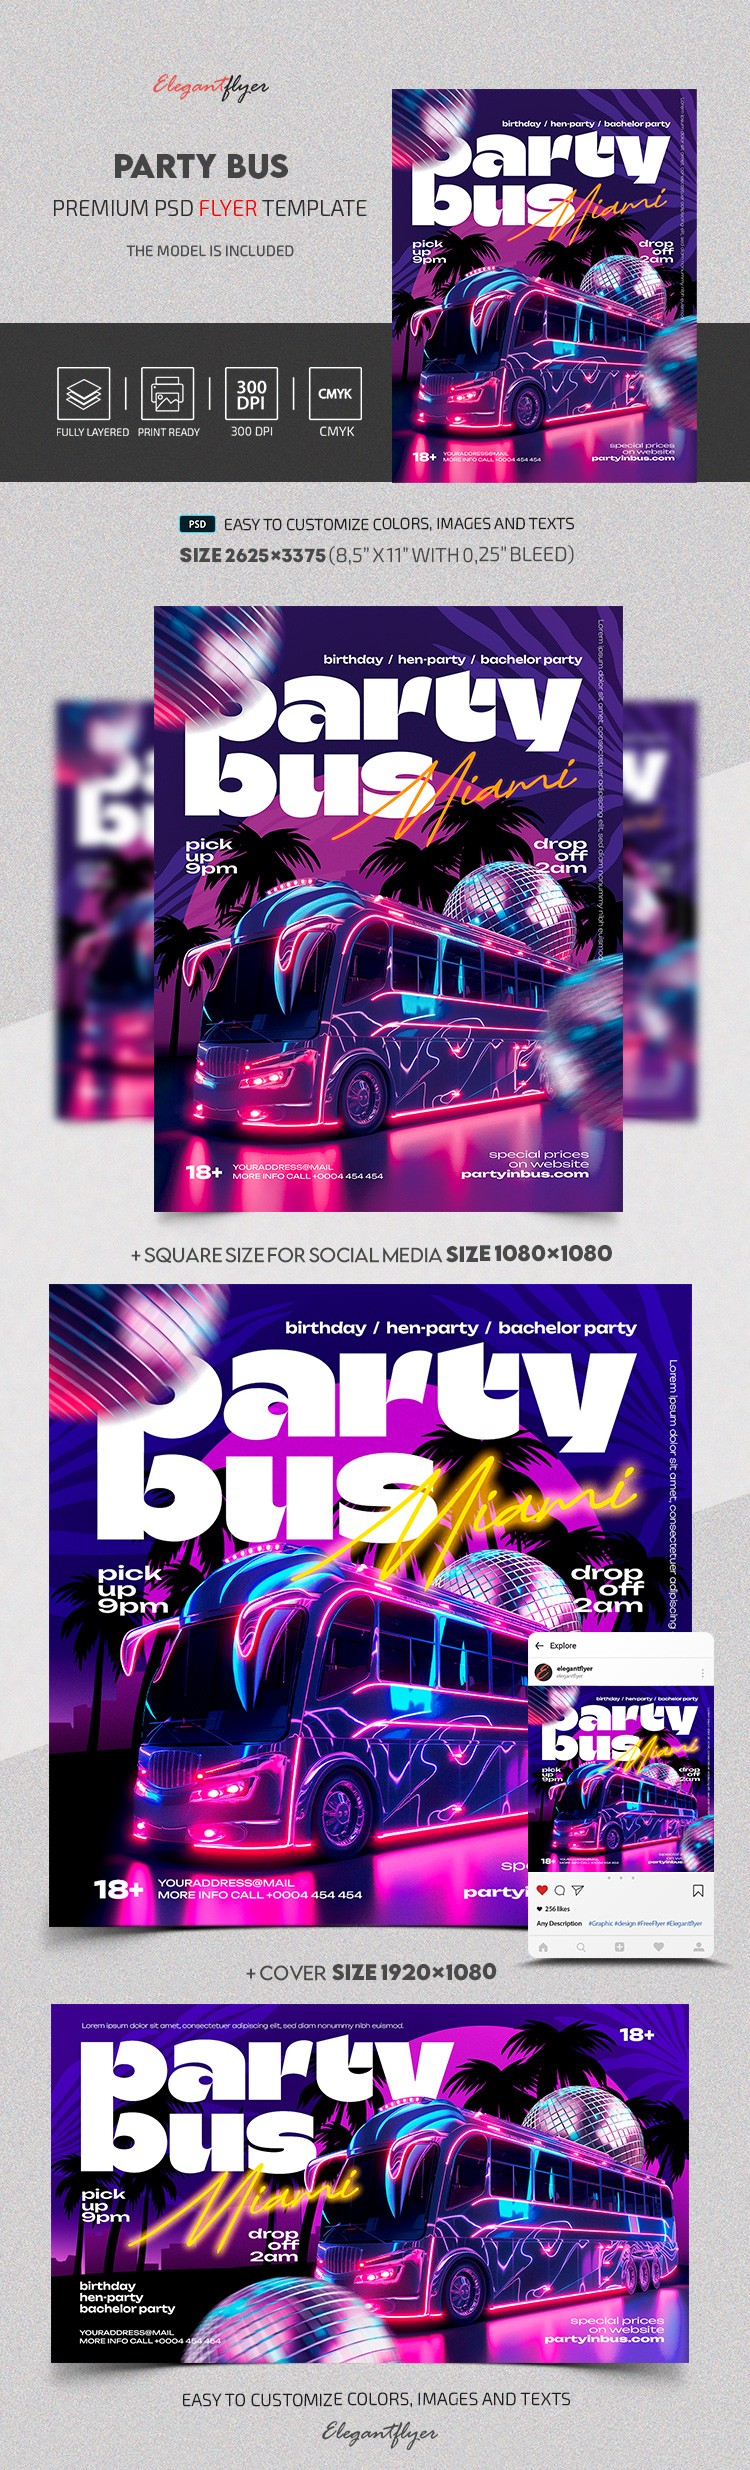 Party Bus by ElegantFlyer